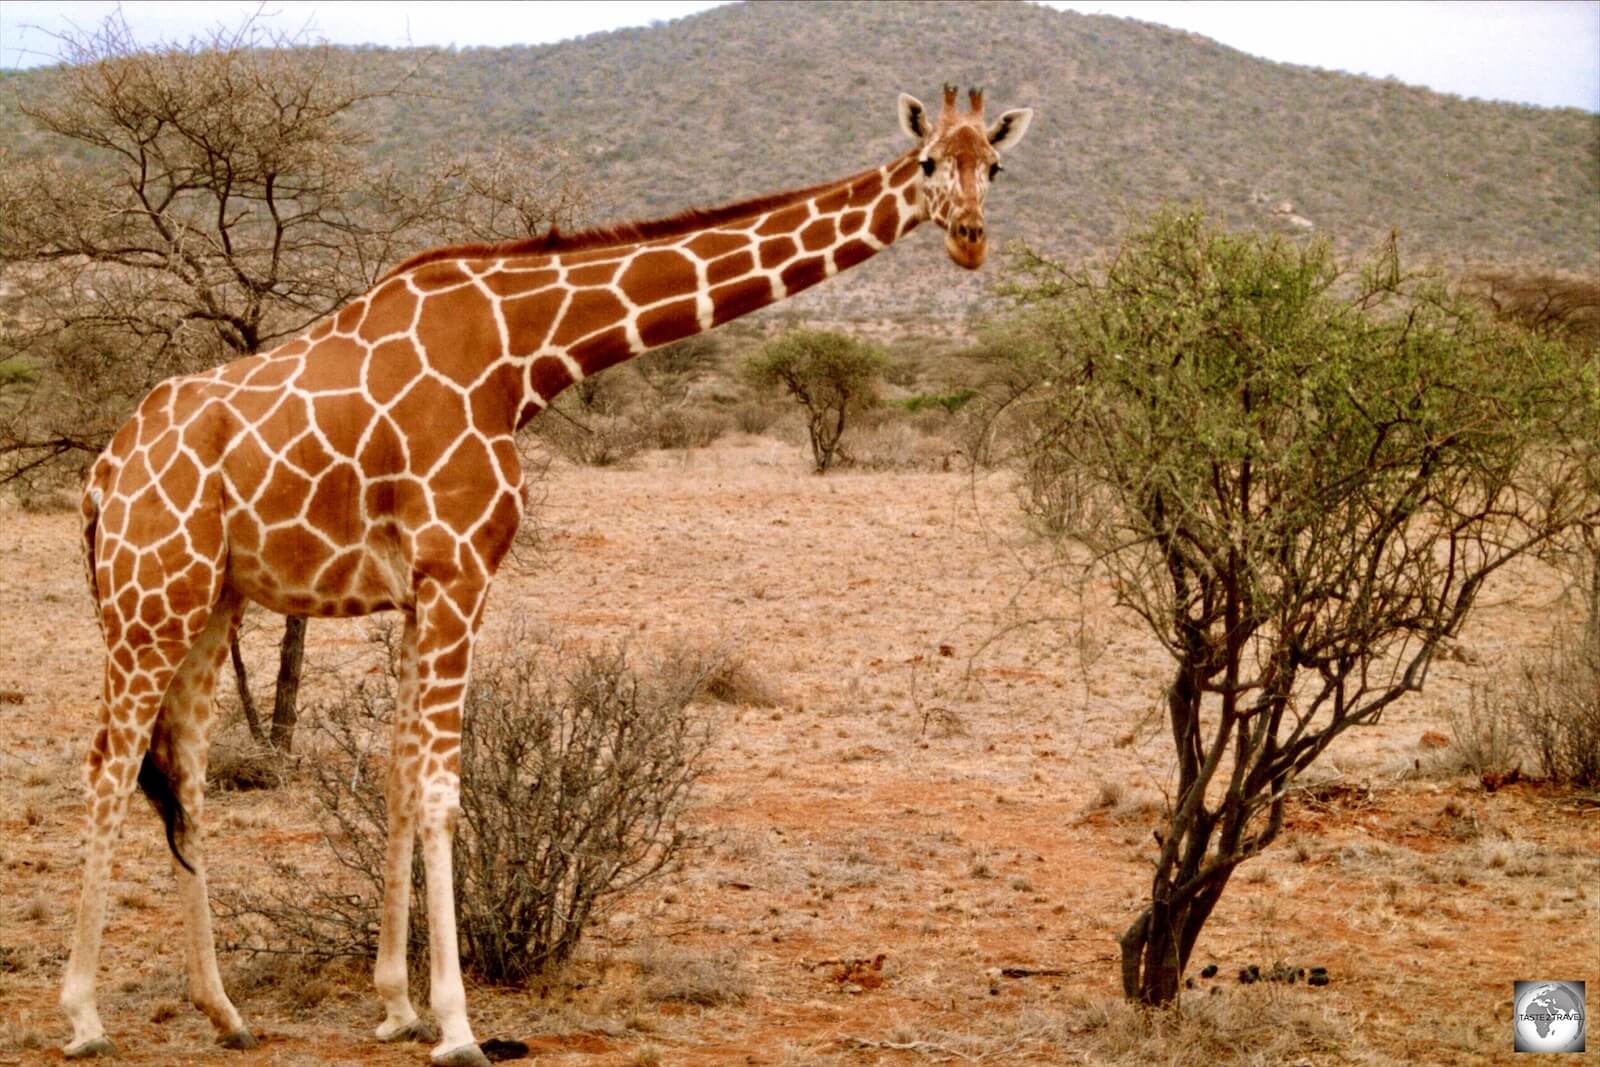 Reticulated Giraffe, Samburu National Park, Kenya